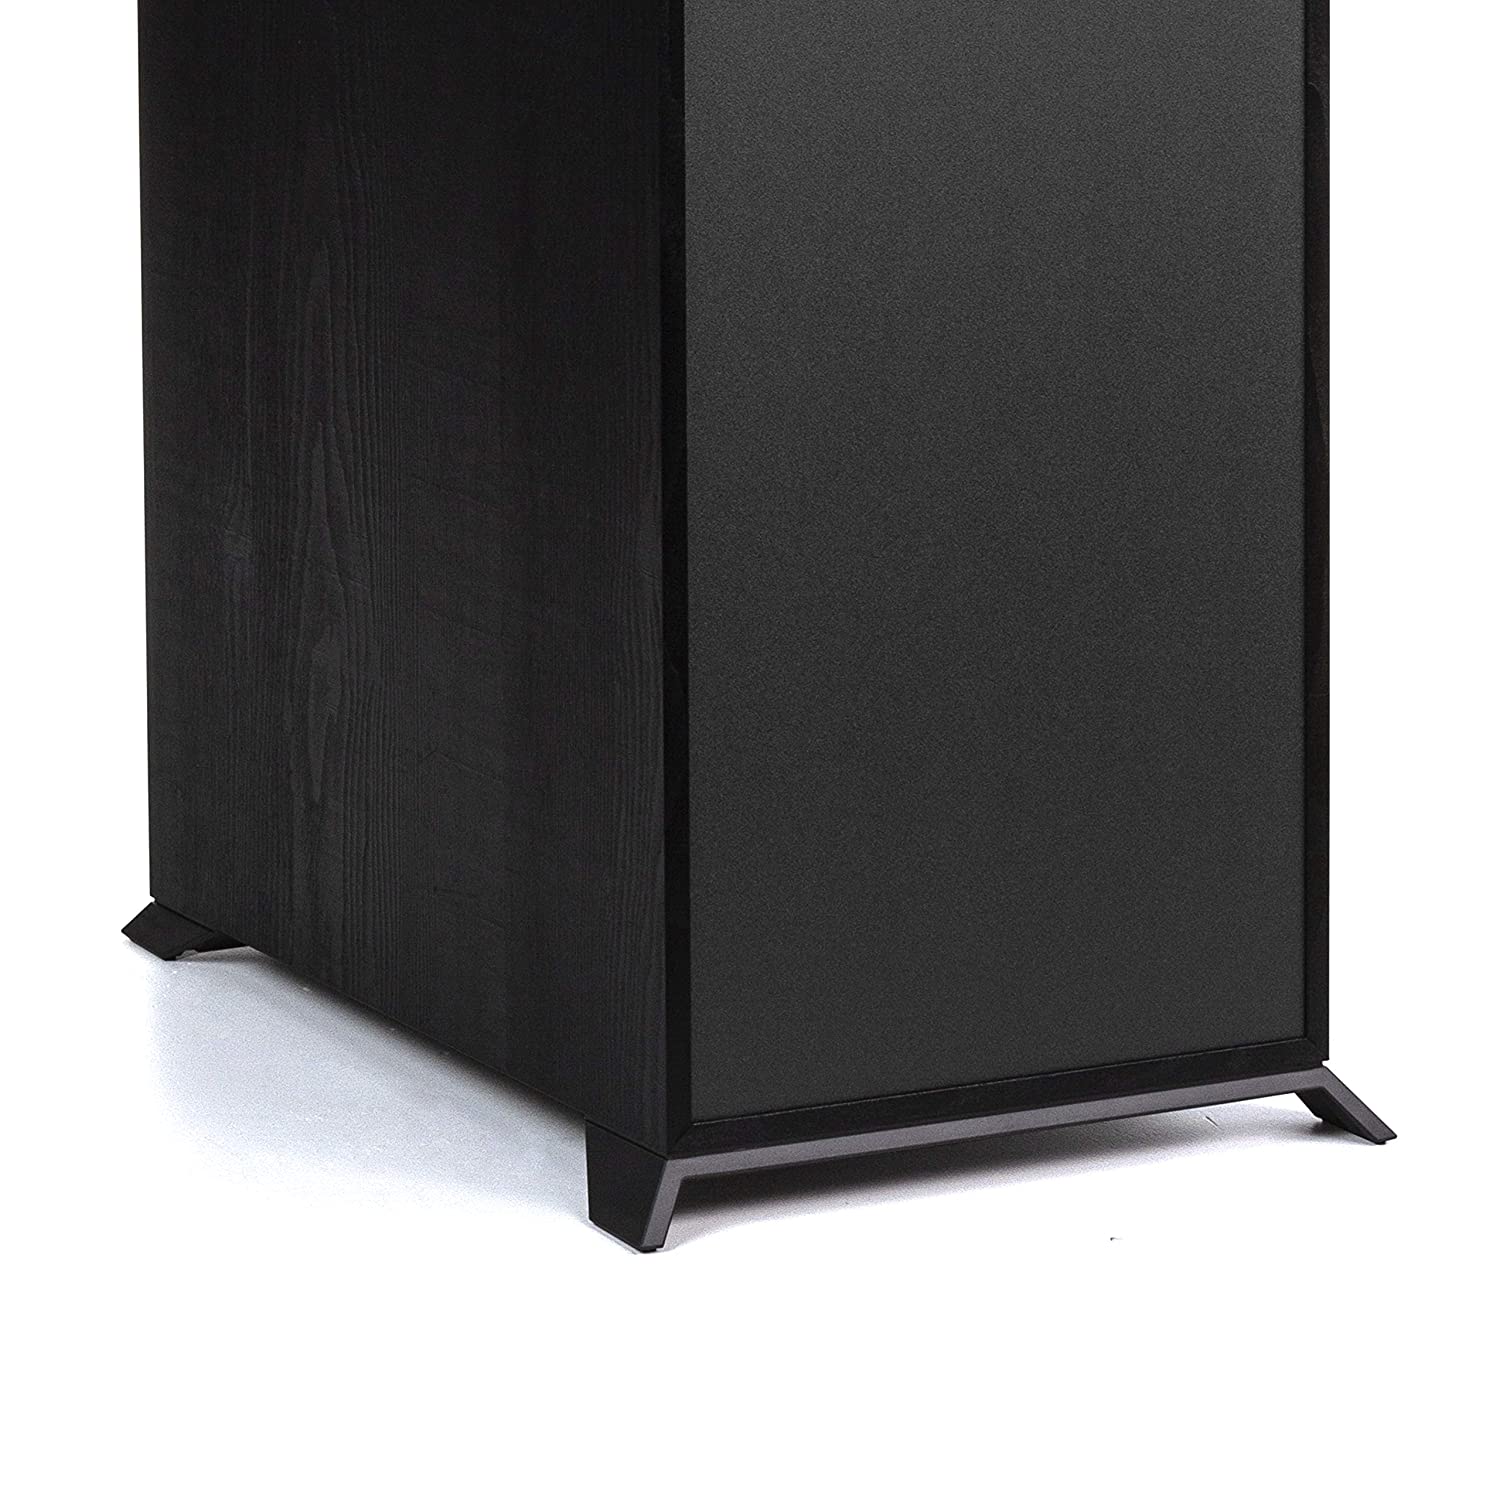 Klipsch R-600-F Floorstanding Speaker (Pair)